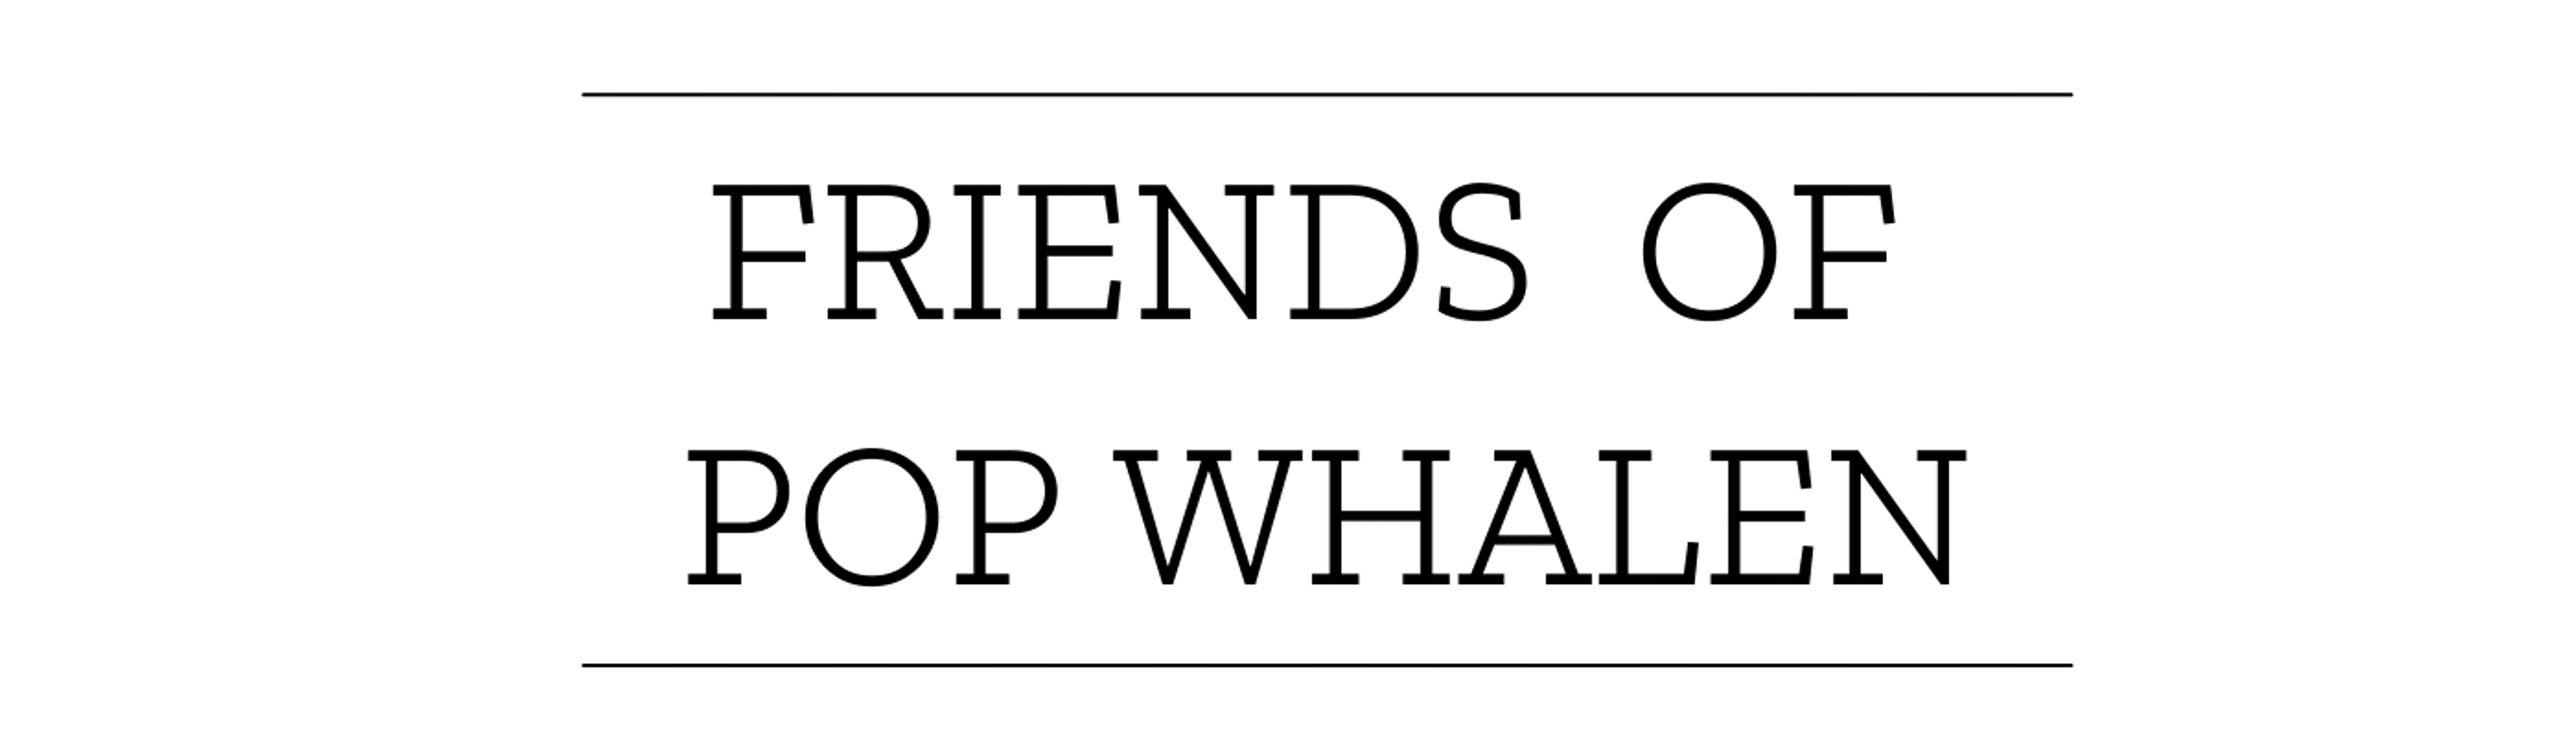 Boston Bruins Alumni vs Friends of Pop Whalen logo image